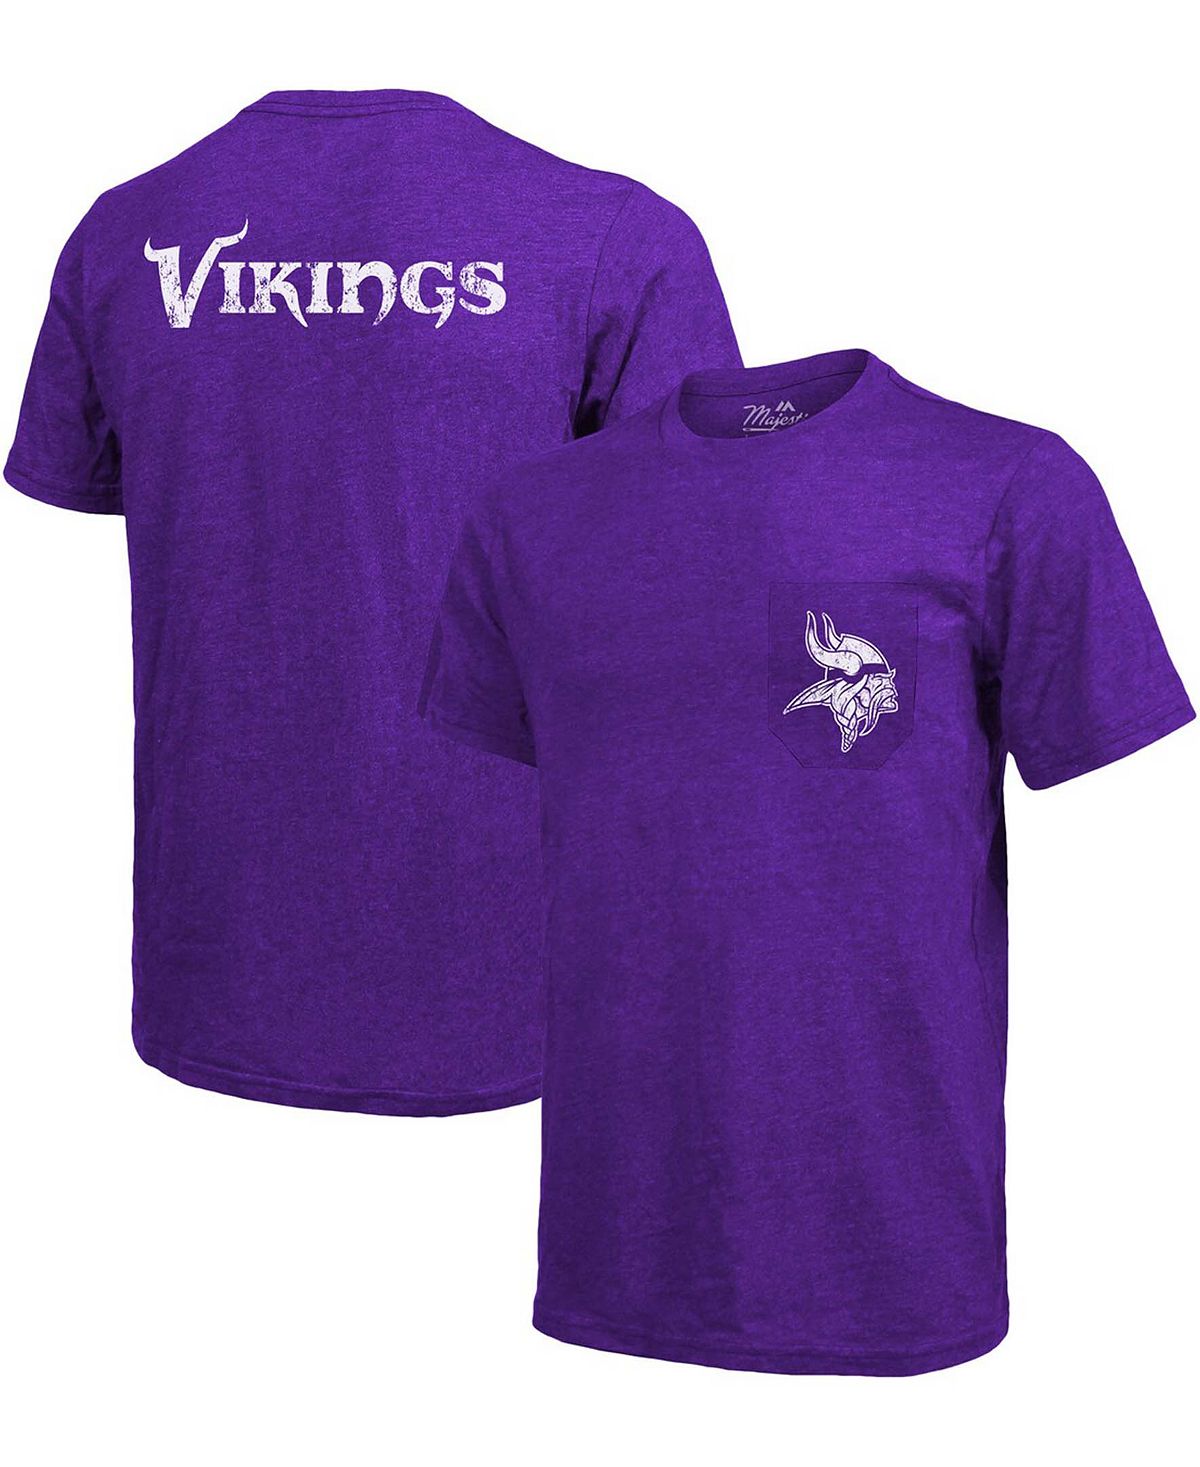 Футболка minnesota vikings tri-blend pocket pocket - пурпурный Majestic, фиолетовый футболка с карманами tri blend minnesota vikings threads фиолетовый с меланжем majestic